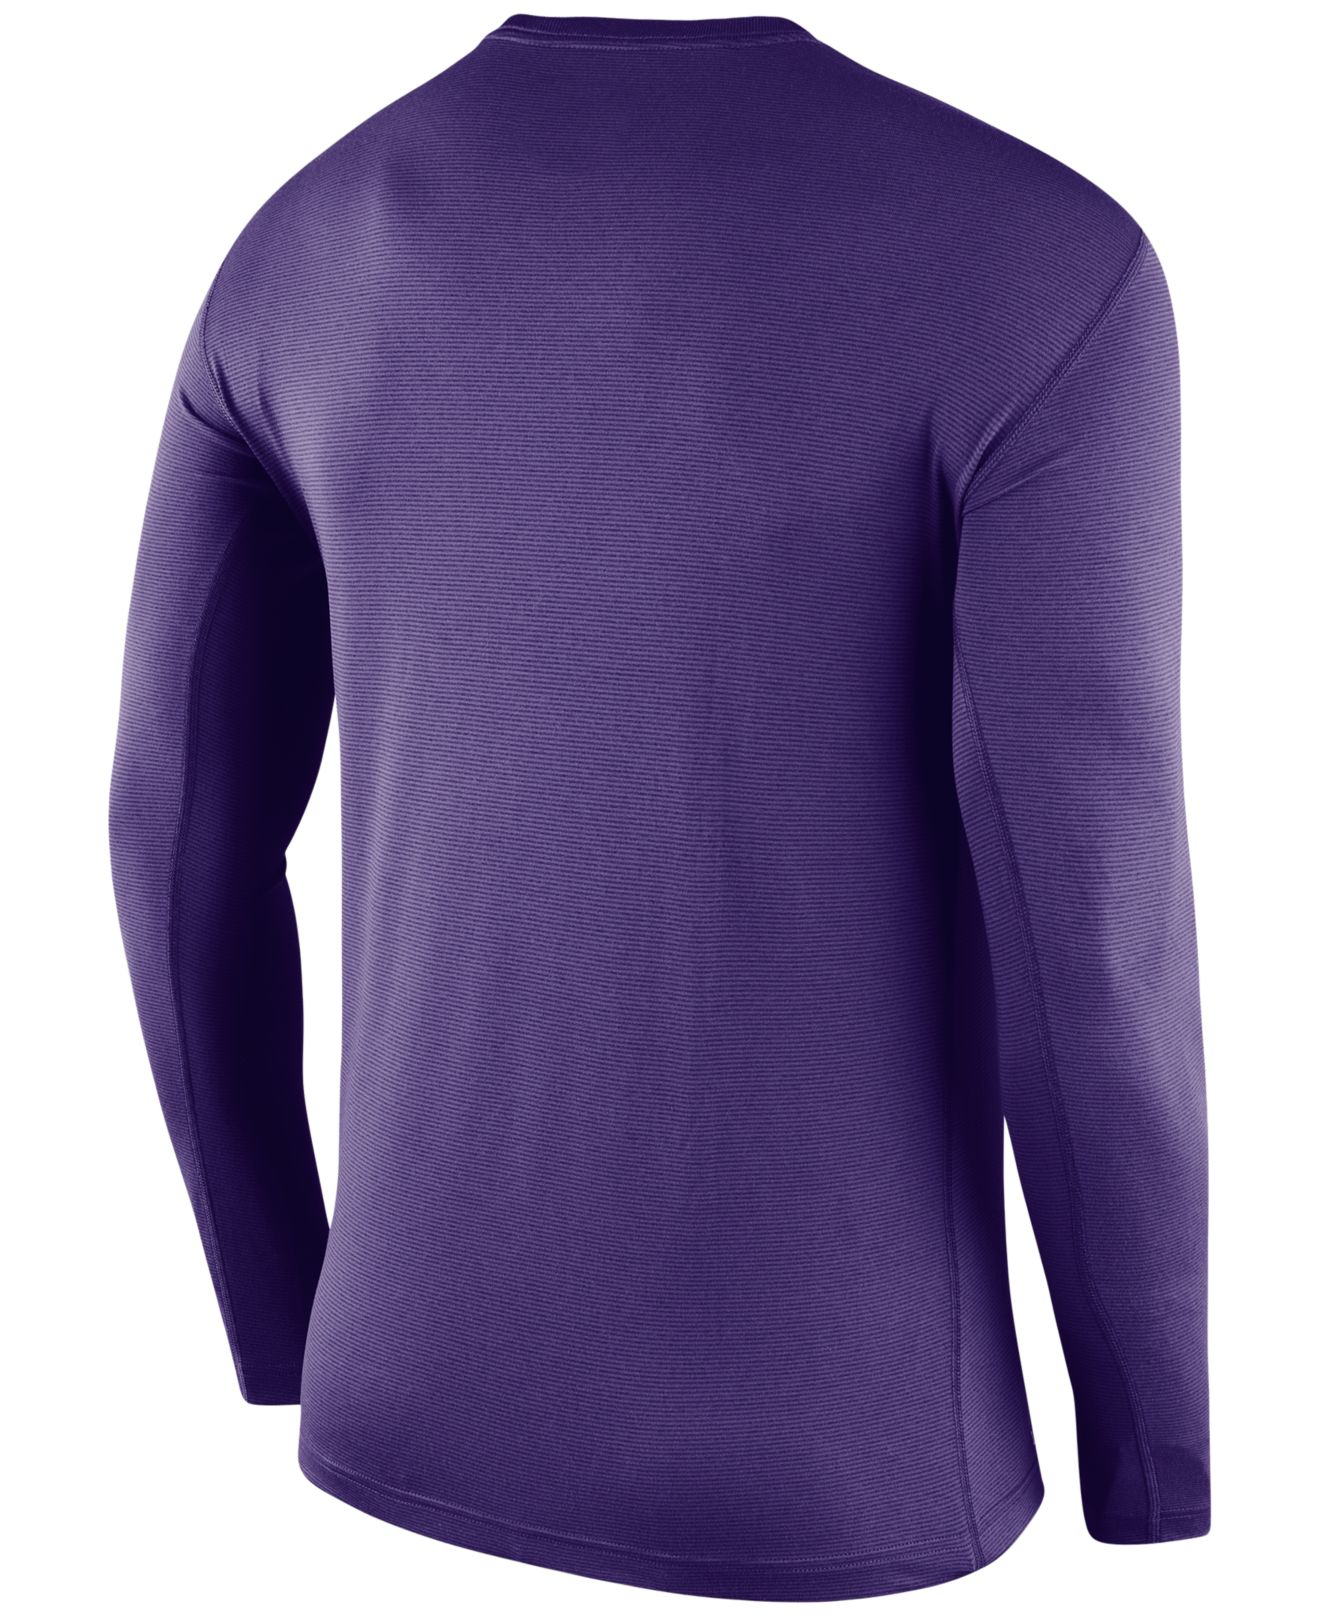 purple dri fit long sleeve shirt